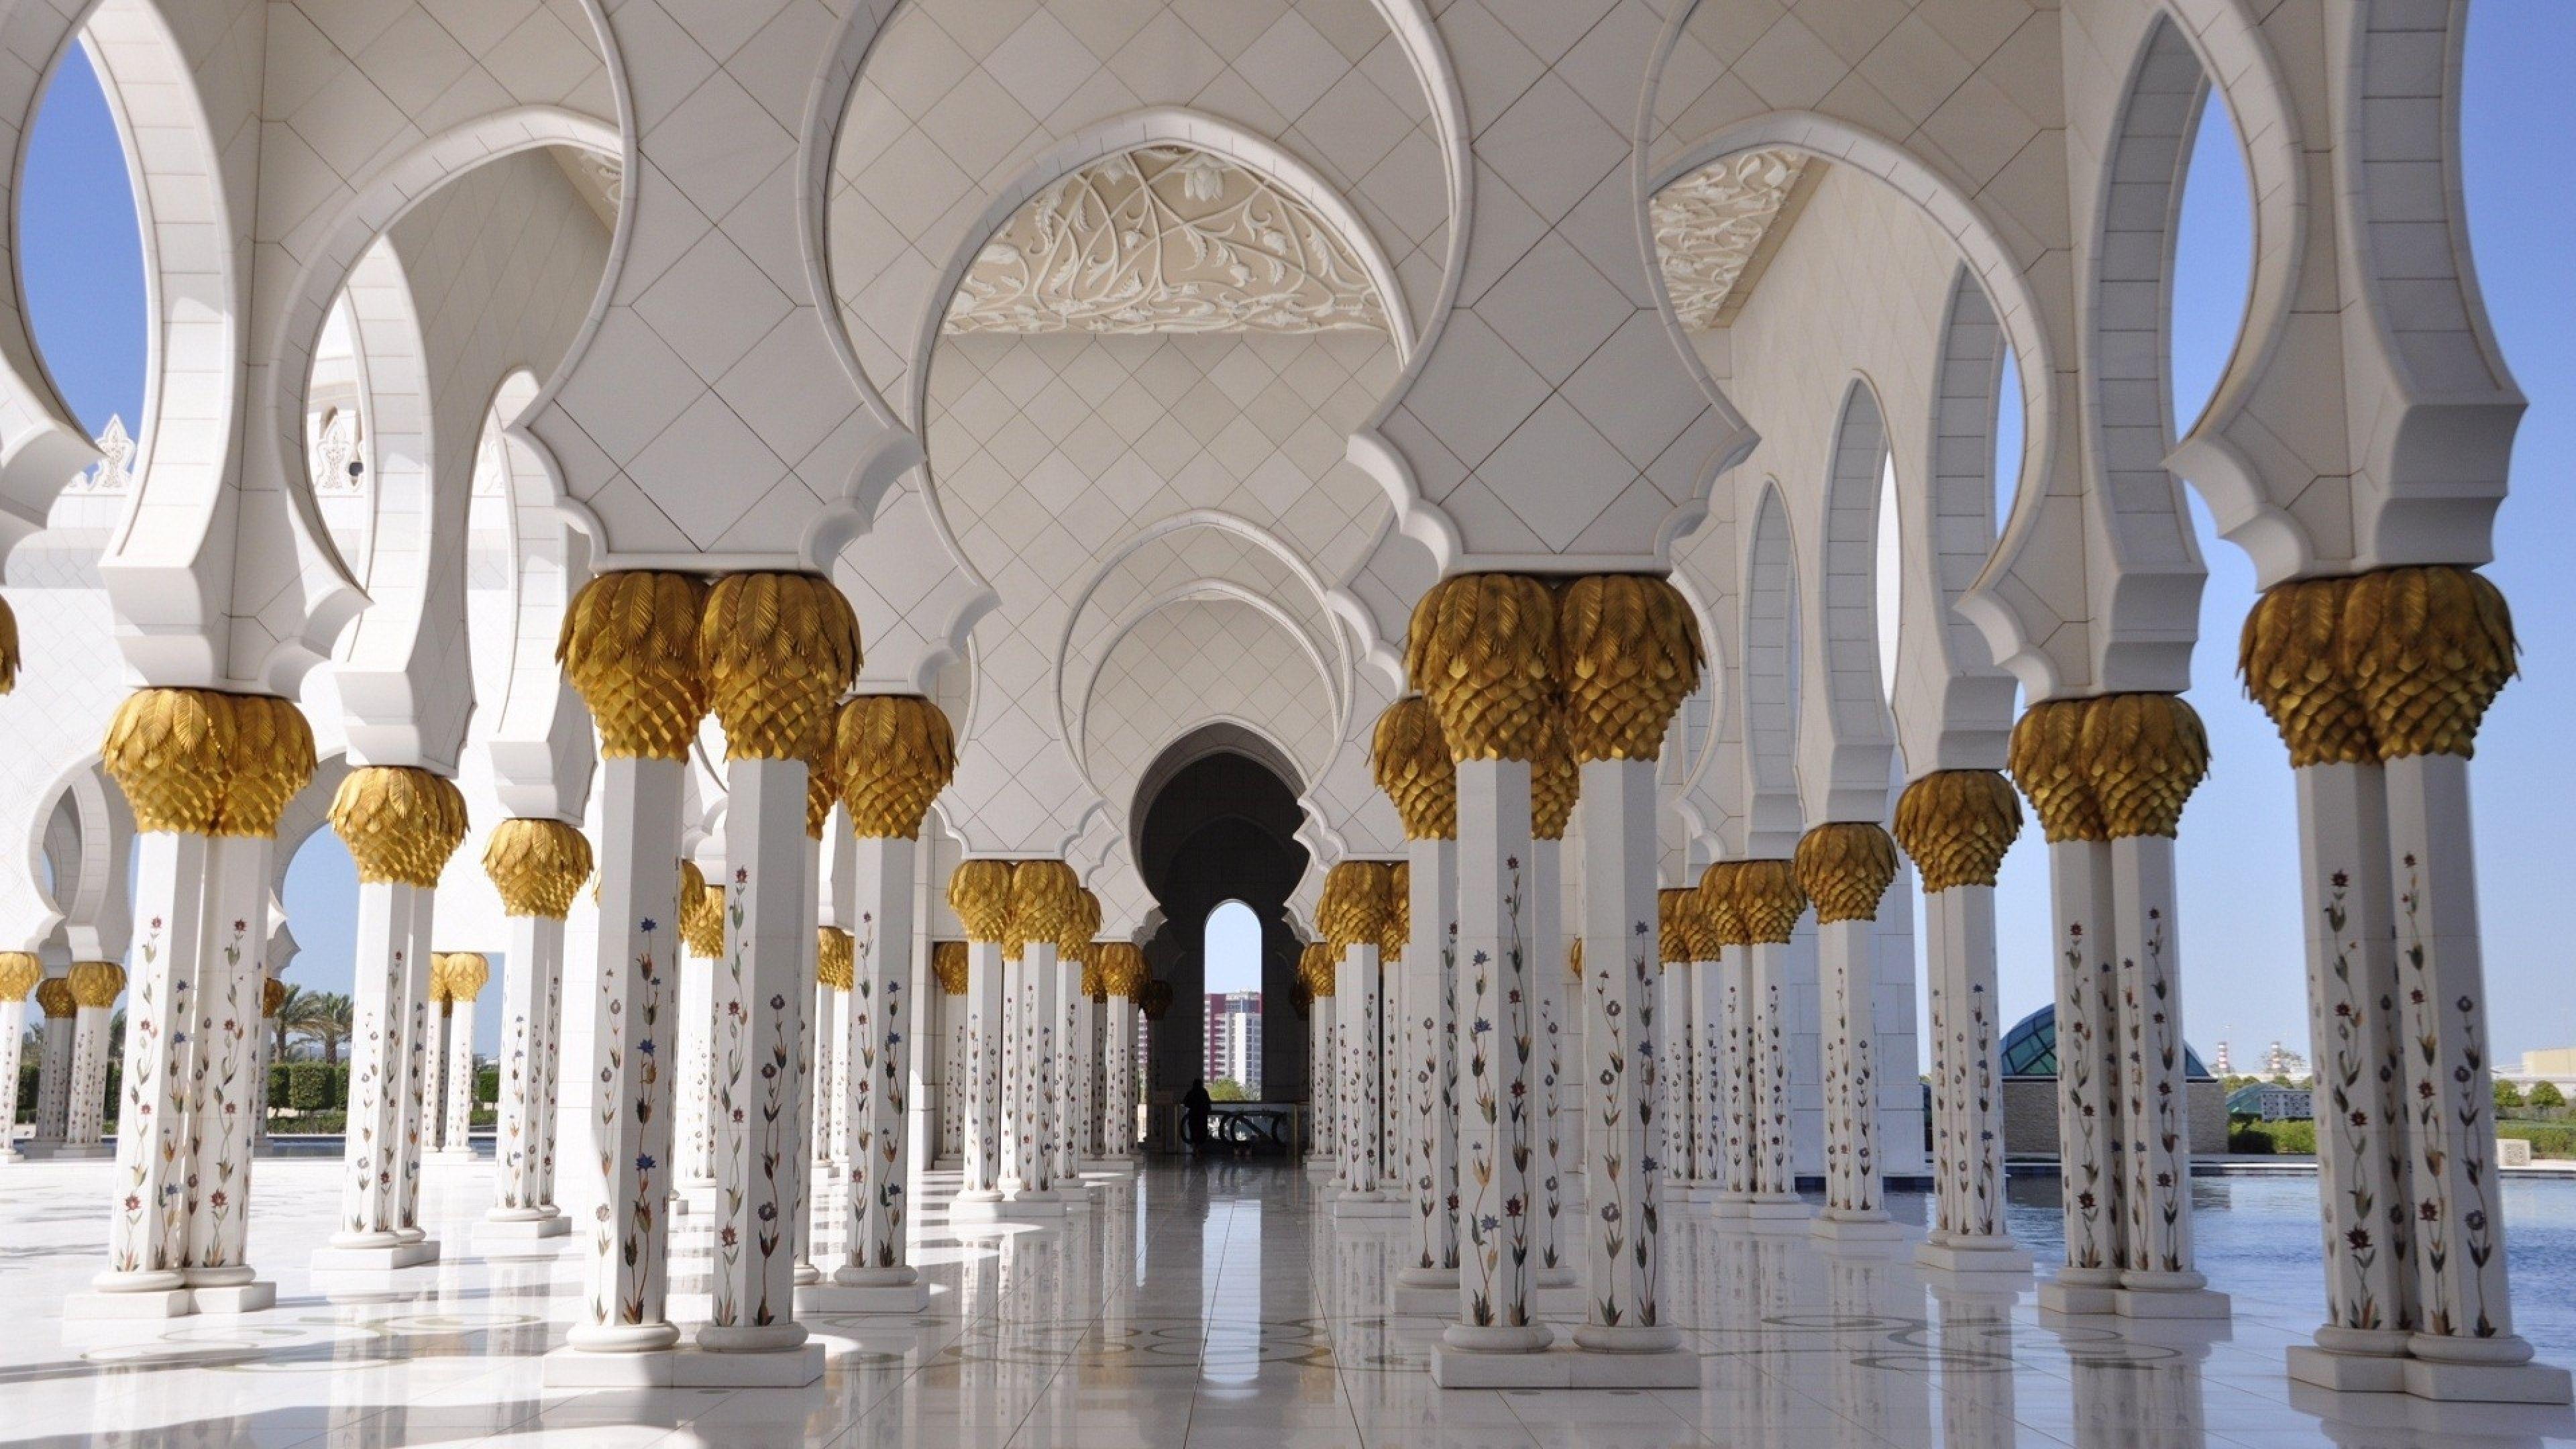 Download Wallpaper 3840x2160 Sheikh zayed mosque, Abu dhabi